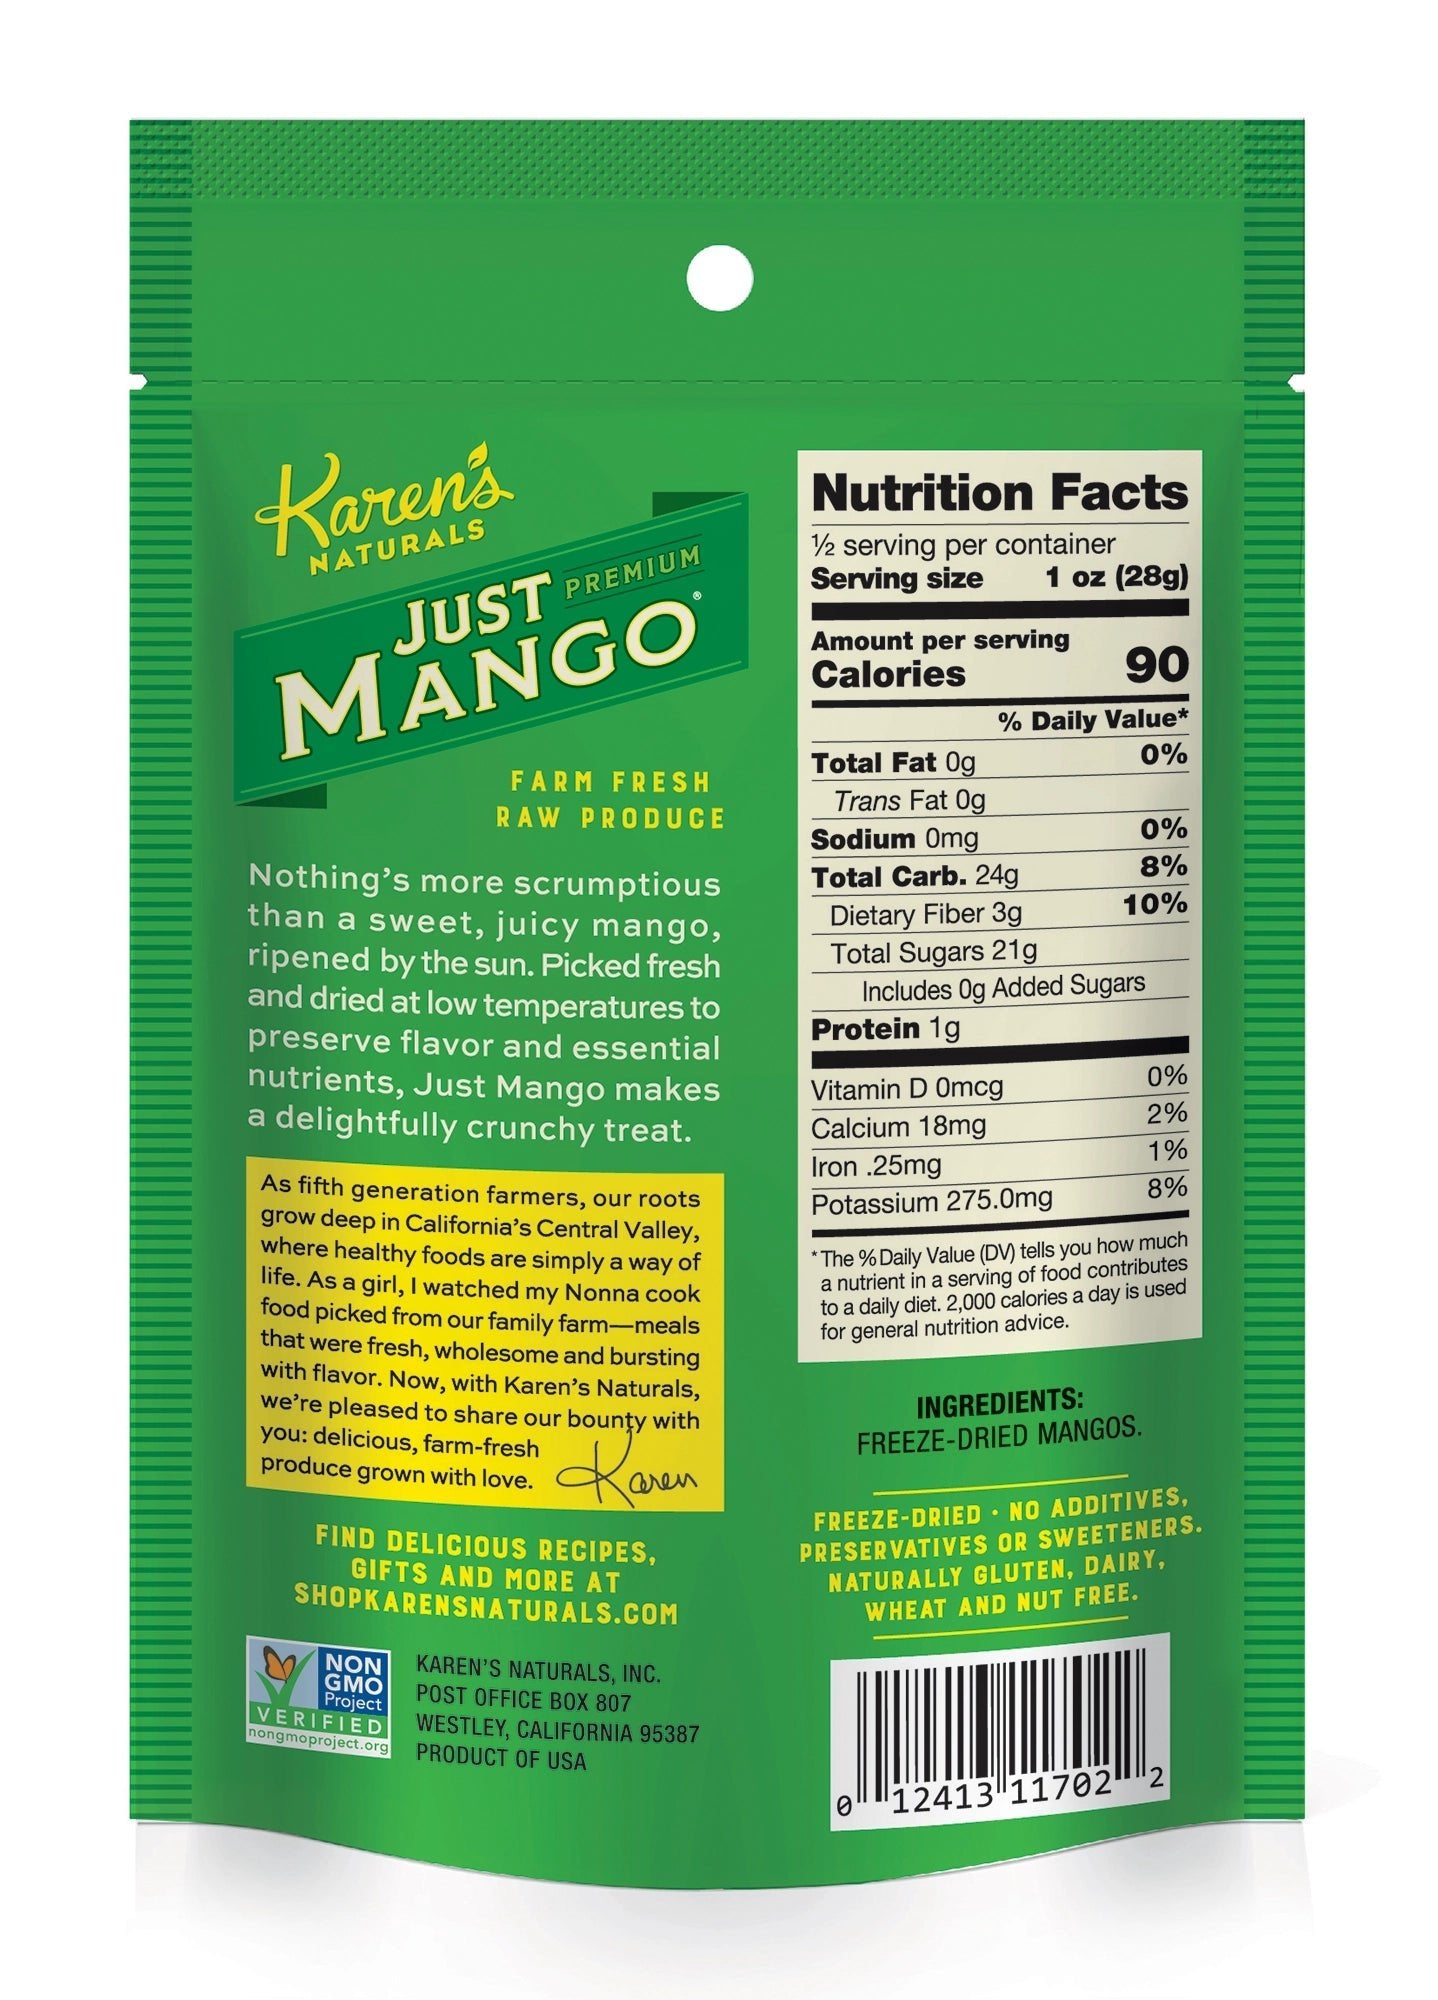 Just Mango - Karen's Naturals